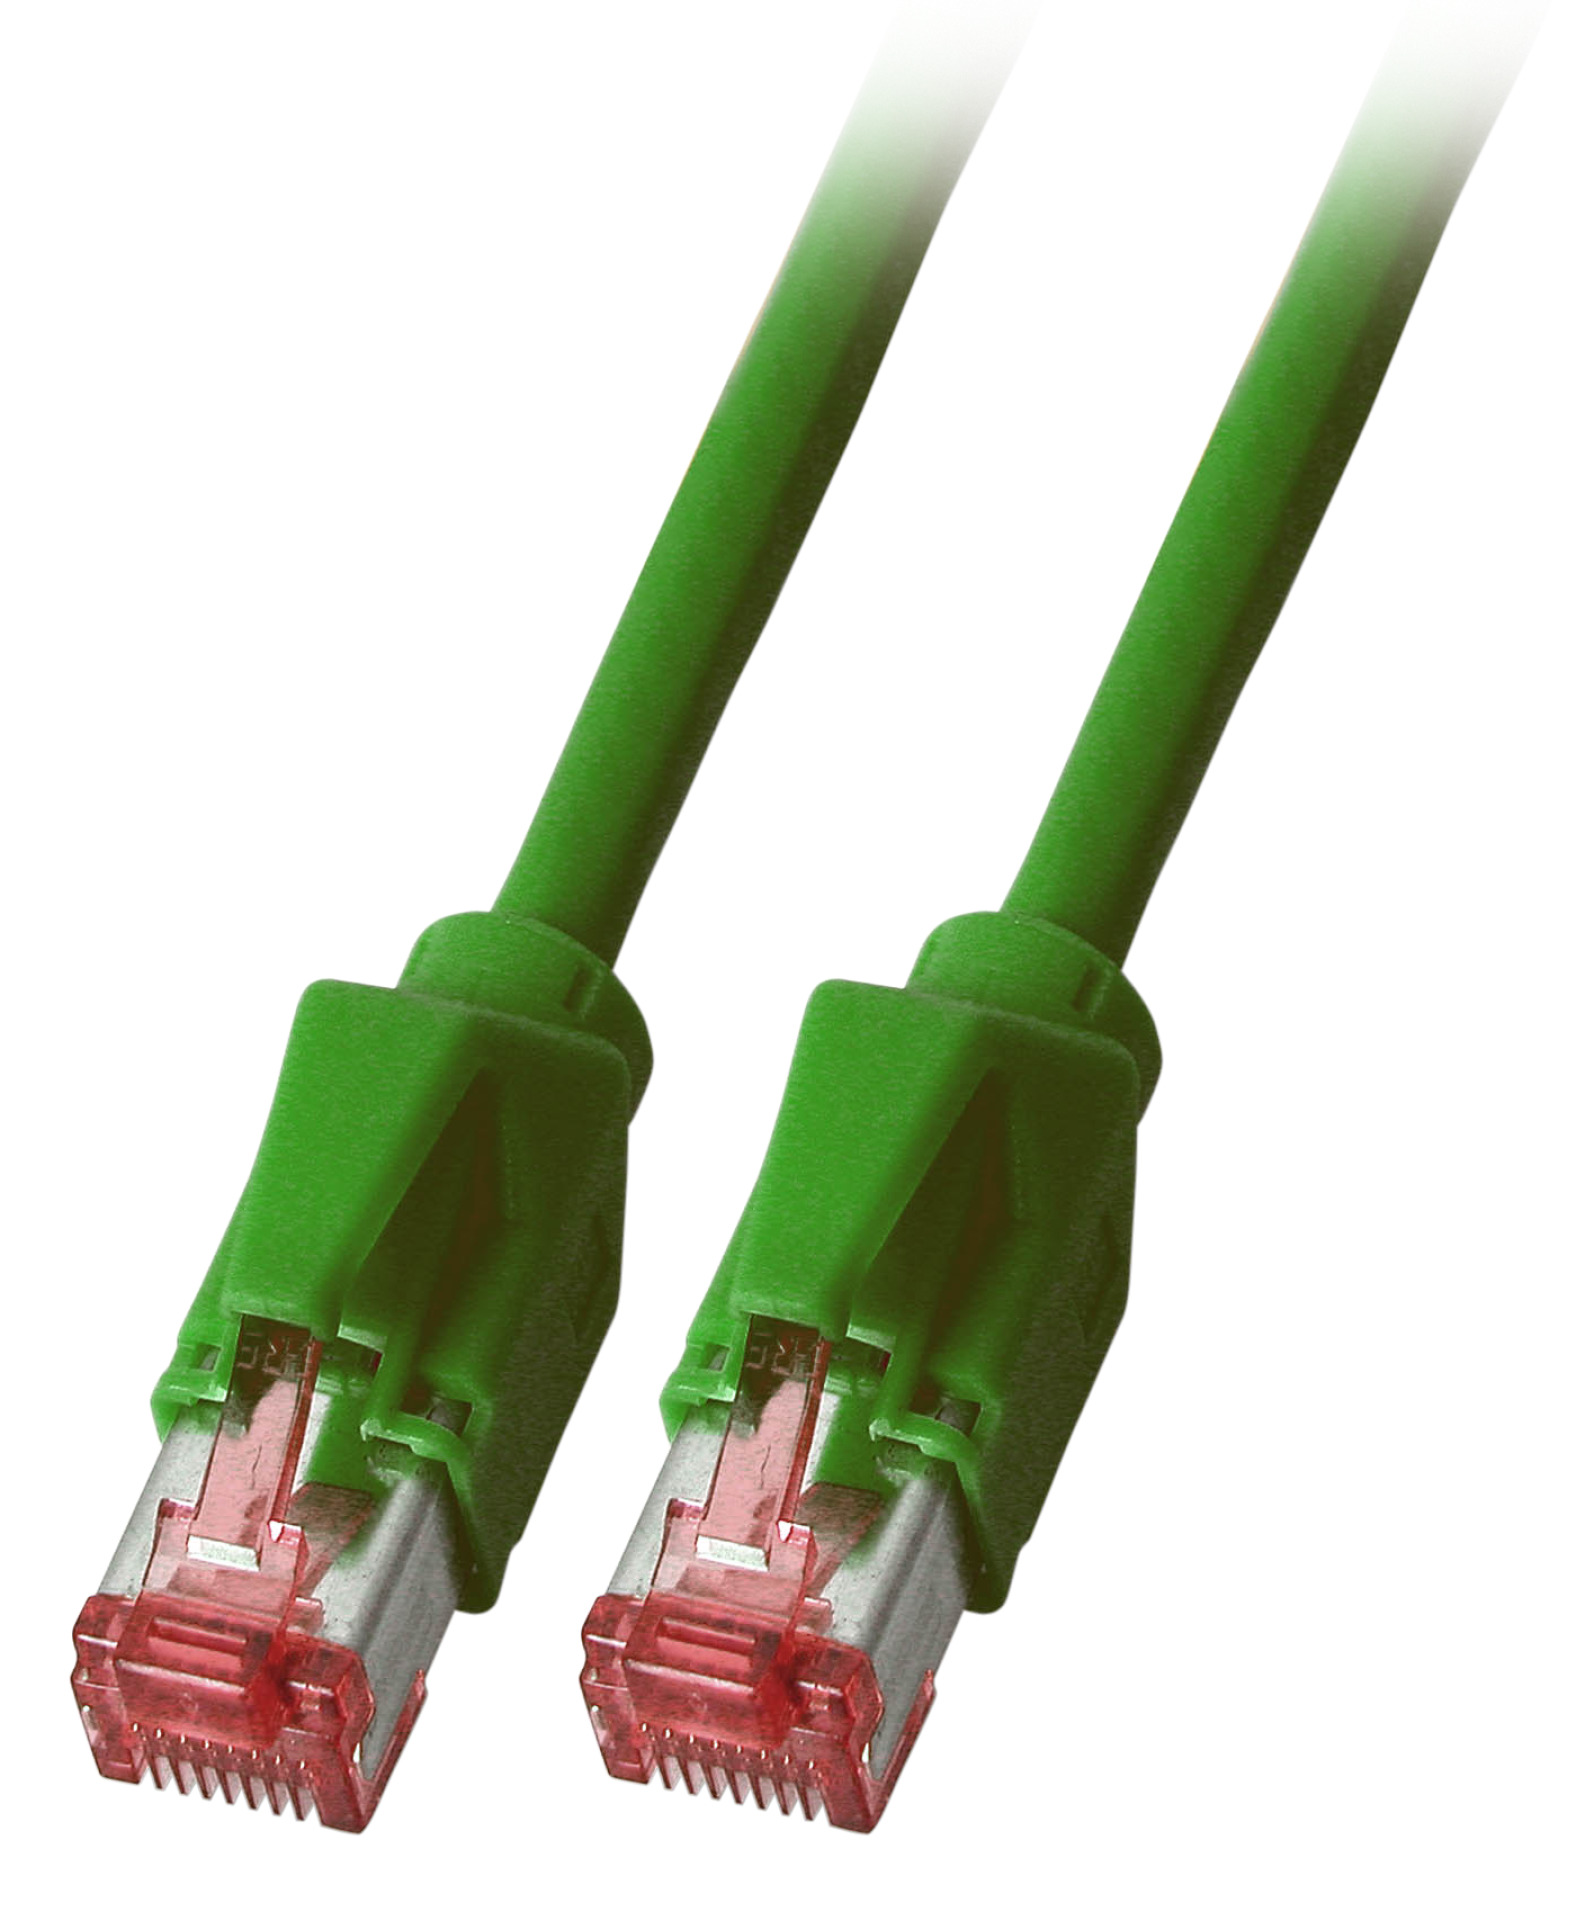 RJ45 Patch cable S/FTP, Cat.6A, TM21, Dätwyler 7702, 1m, green